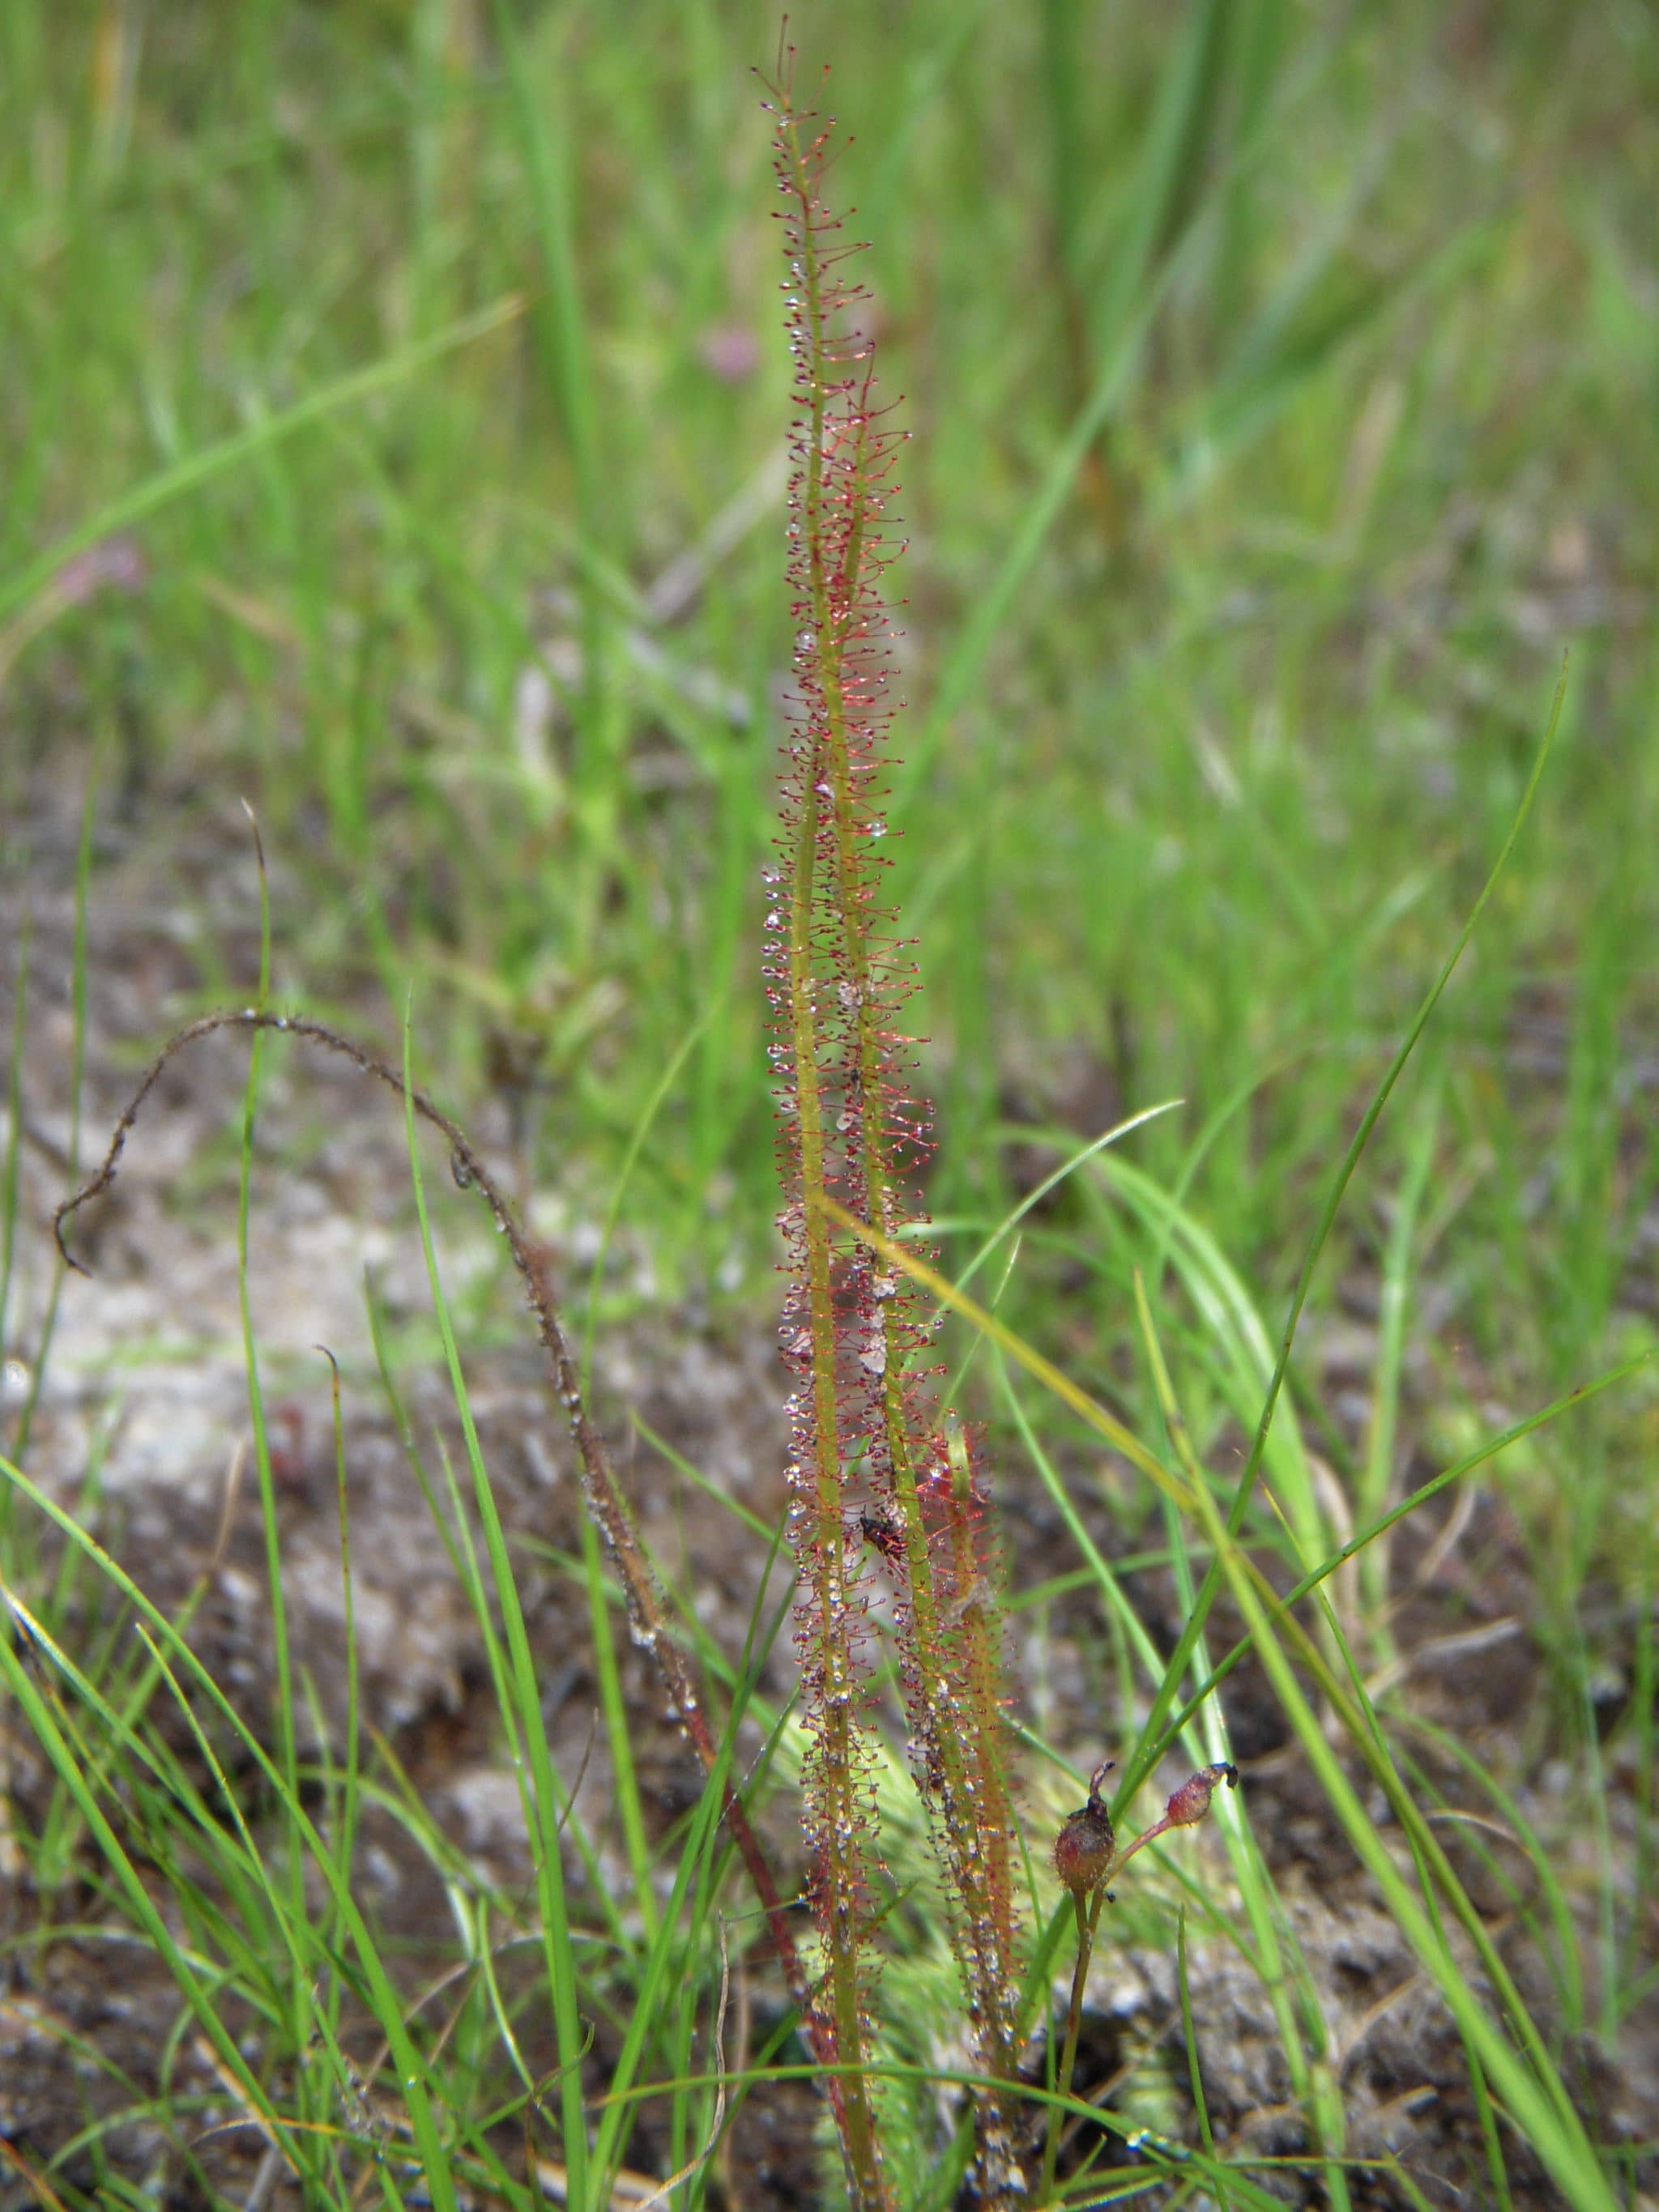 The rare and carnivorous Drosera filiformis (thread-leaved sundew).